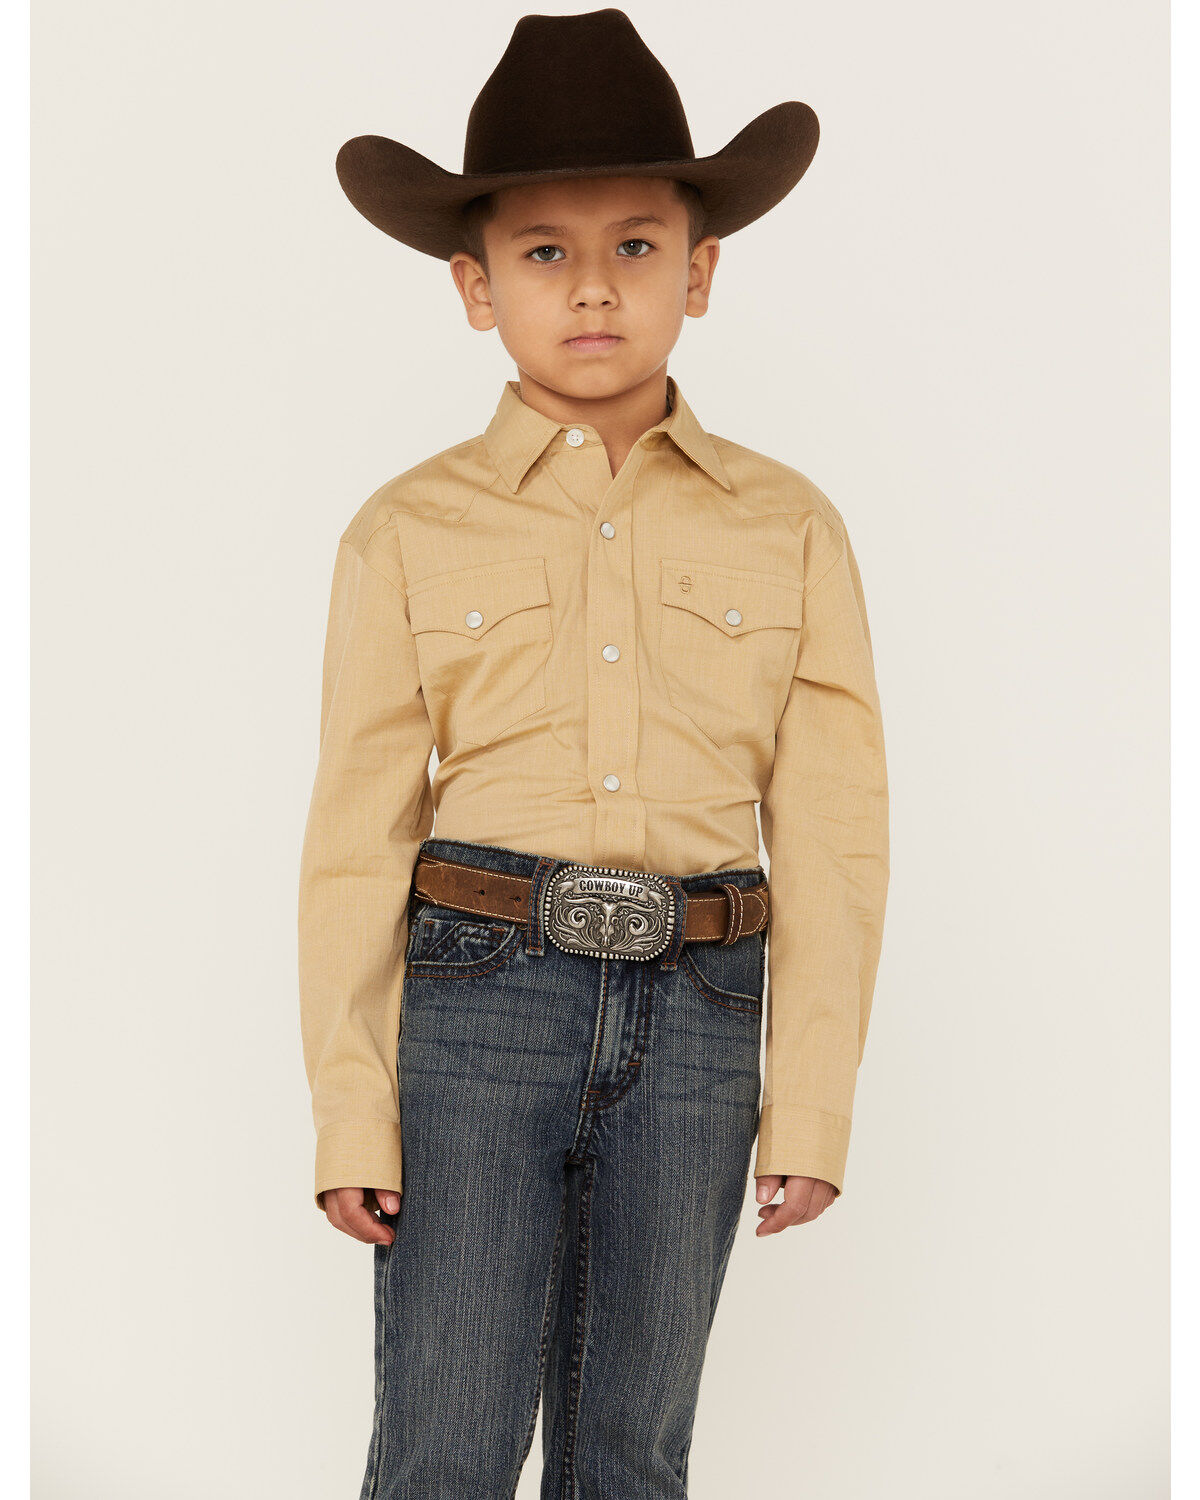 kids cowboy shirts